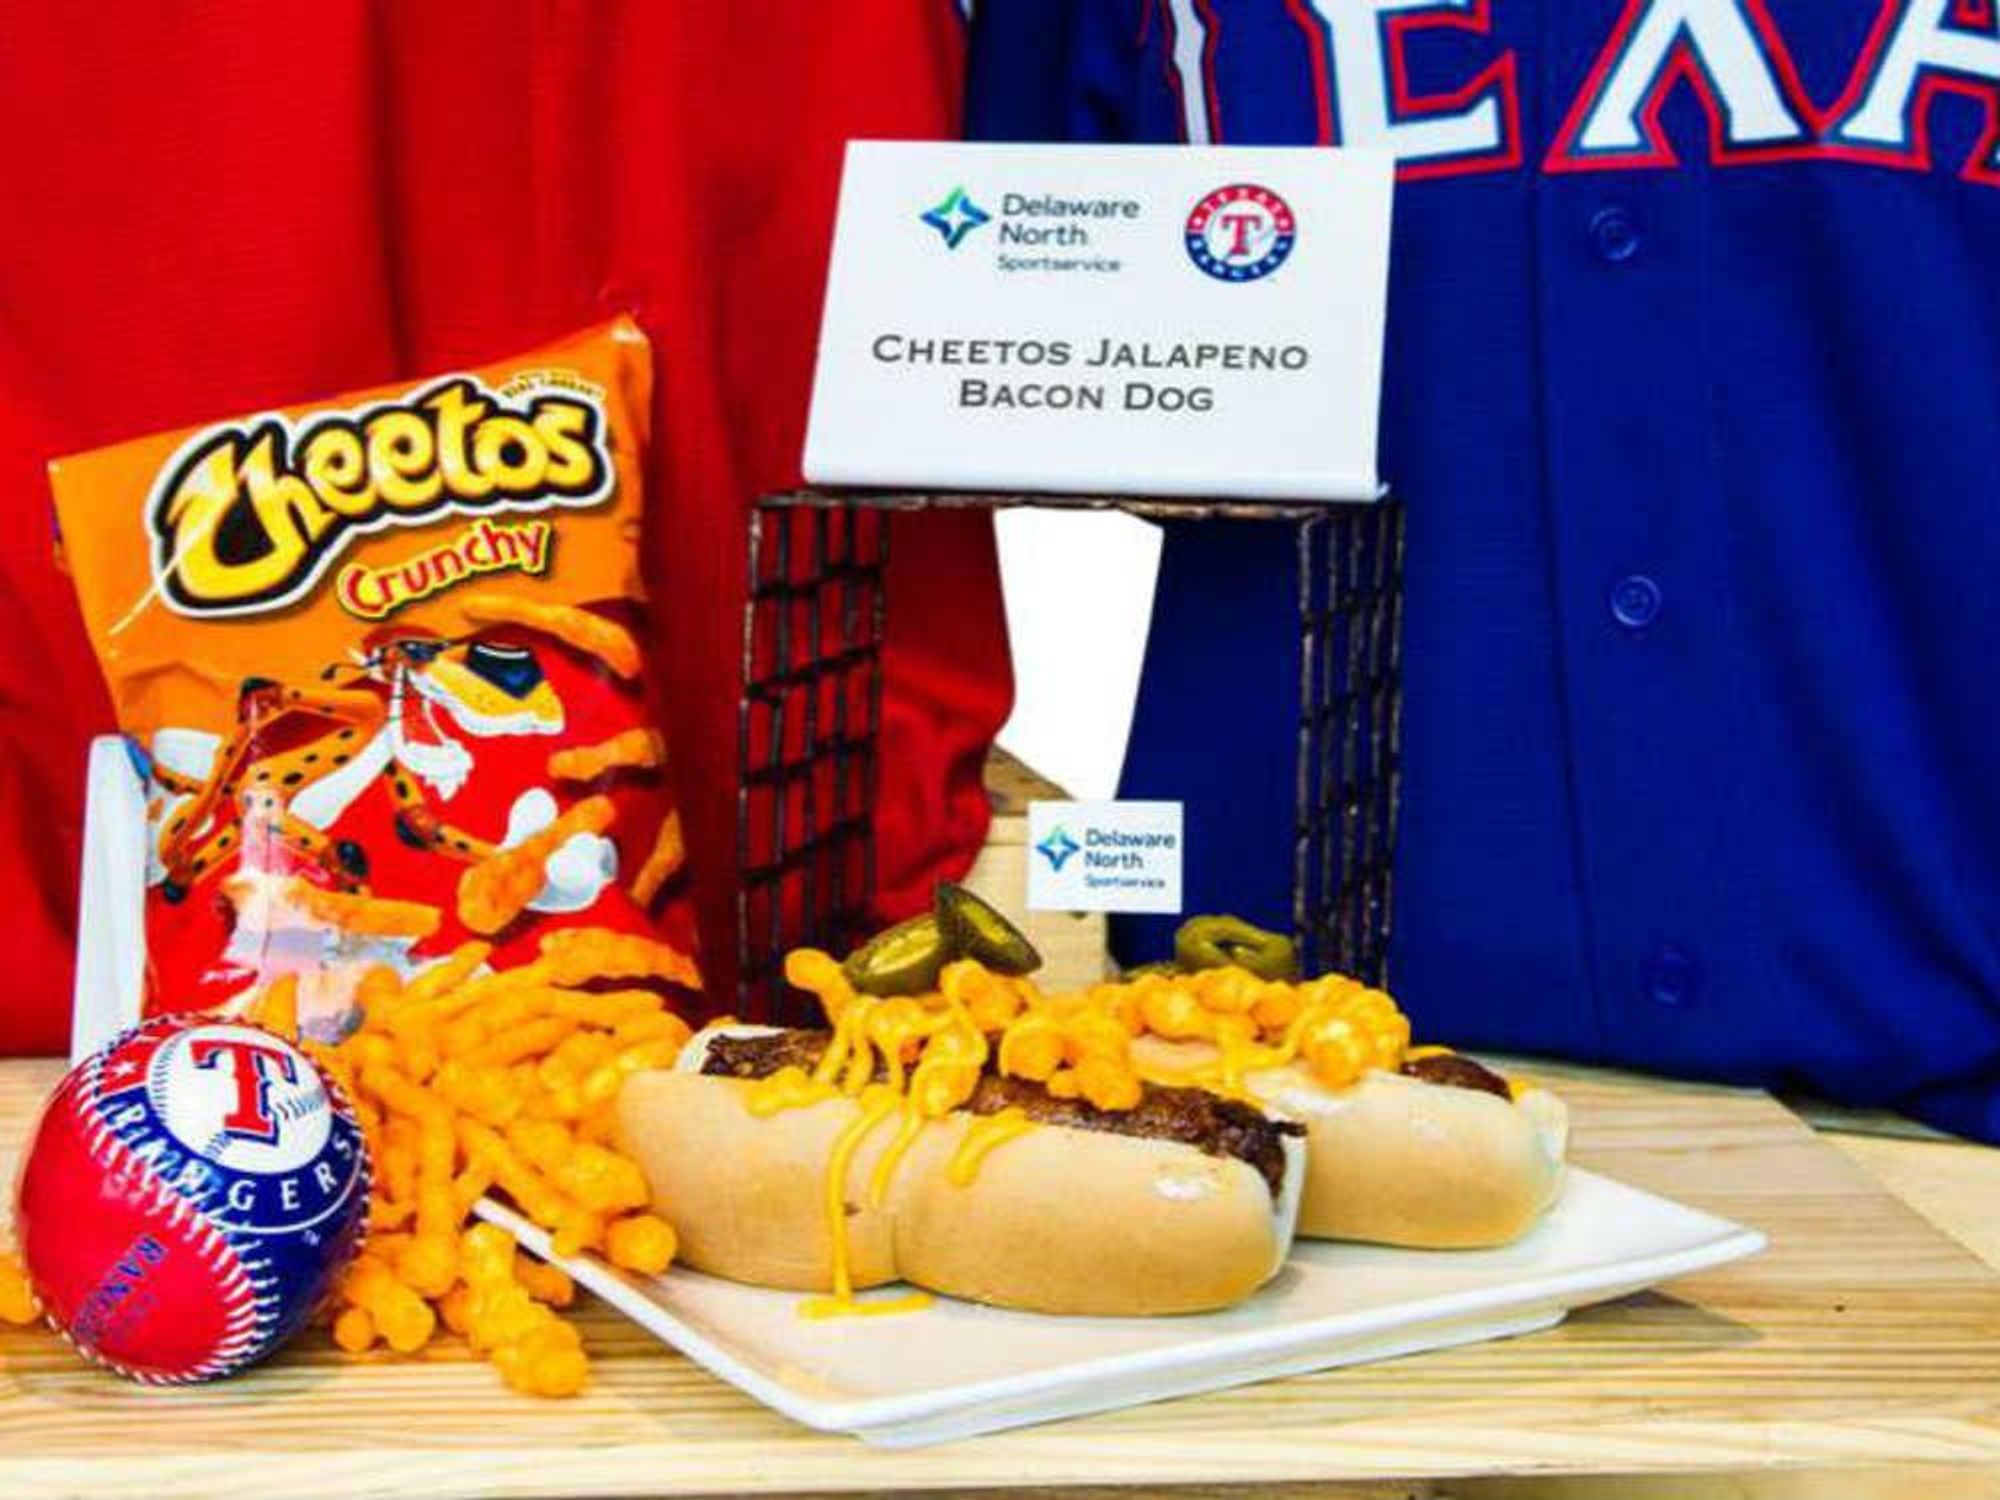 Texas Rangers unleash new crop of outrageous ballpark snacks - CultureMap  Dallas